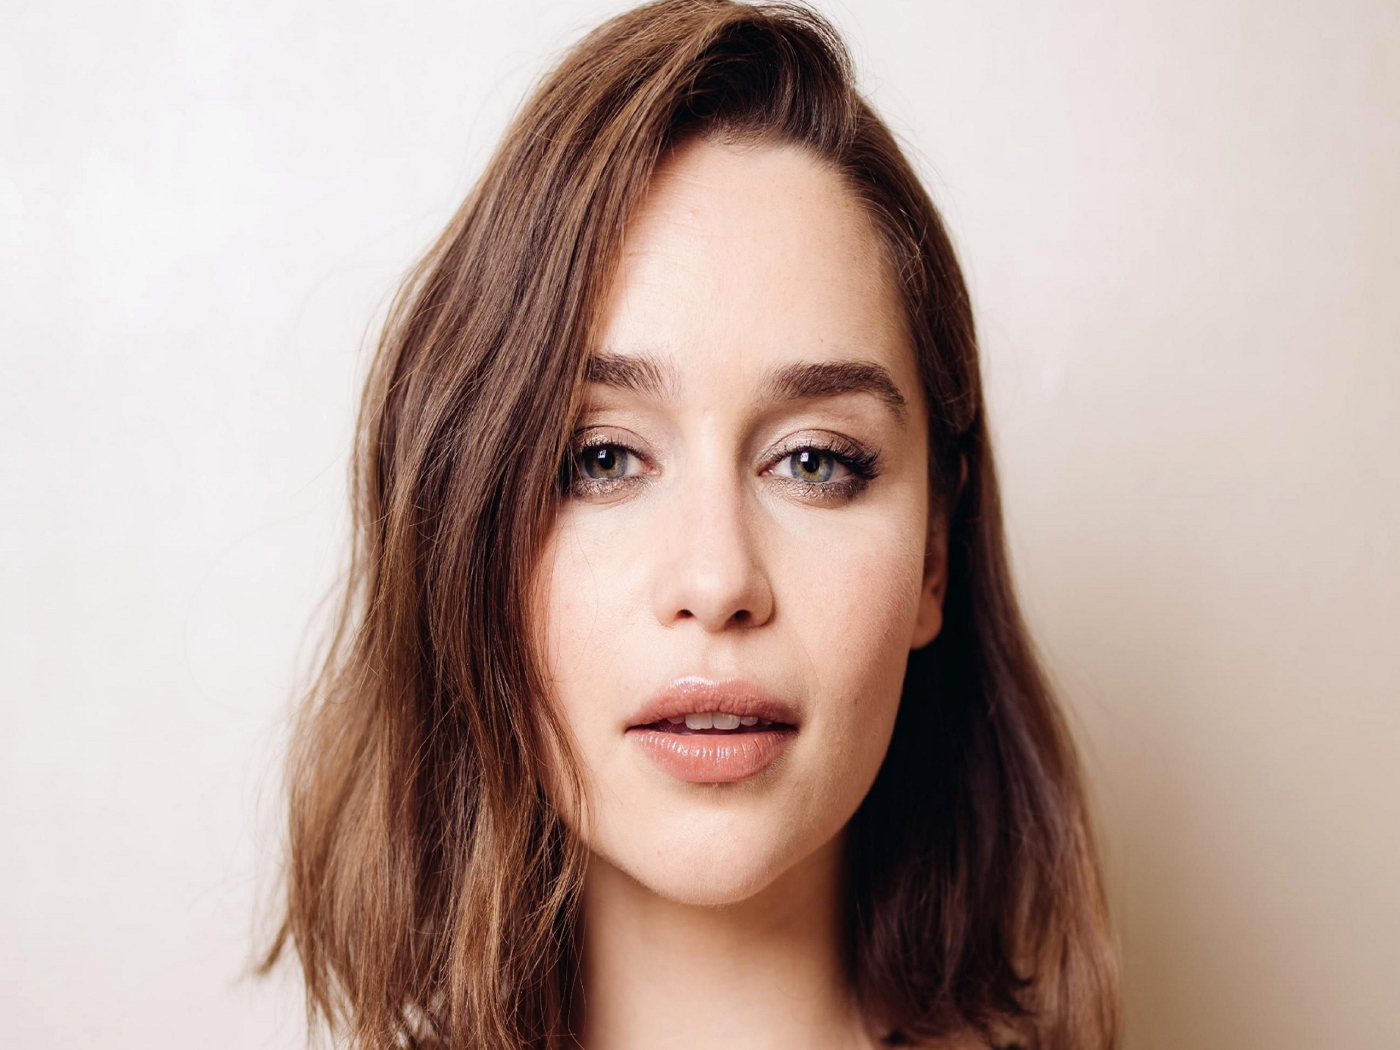 Emilia Clarke Cute Face for 1400 x 1050 resolution